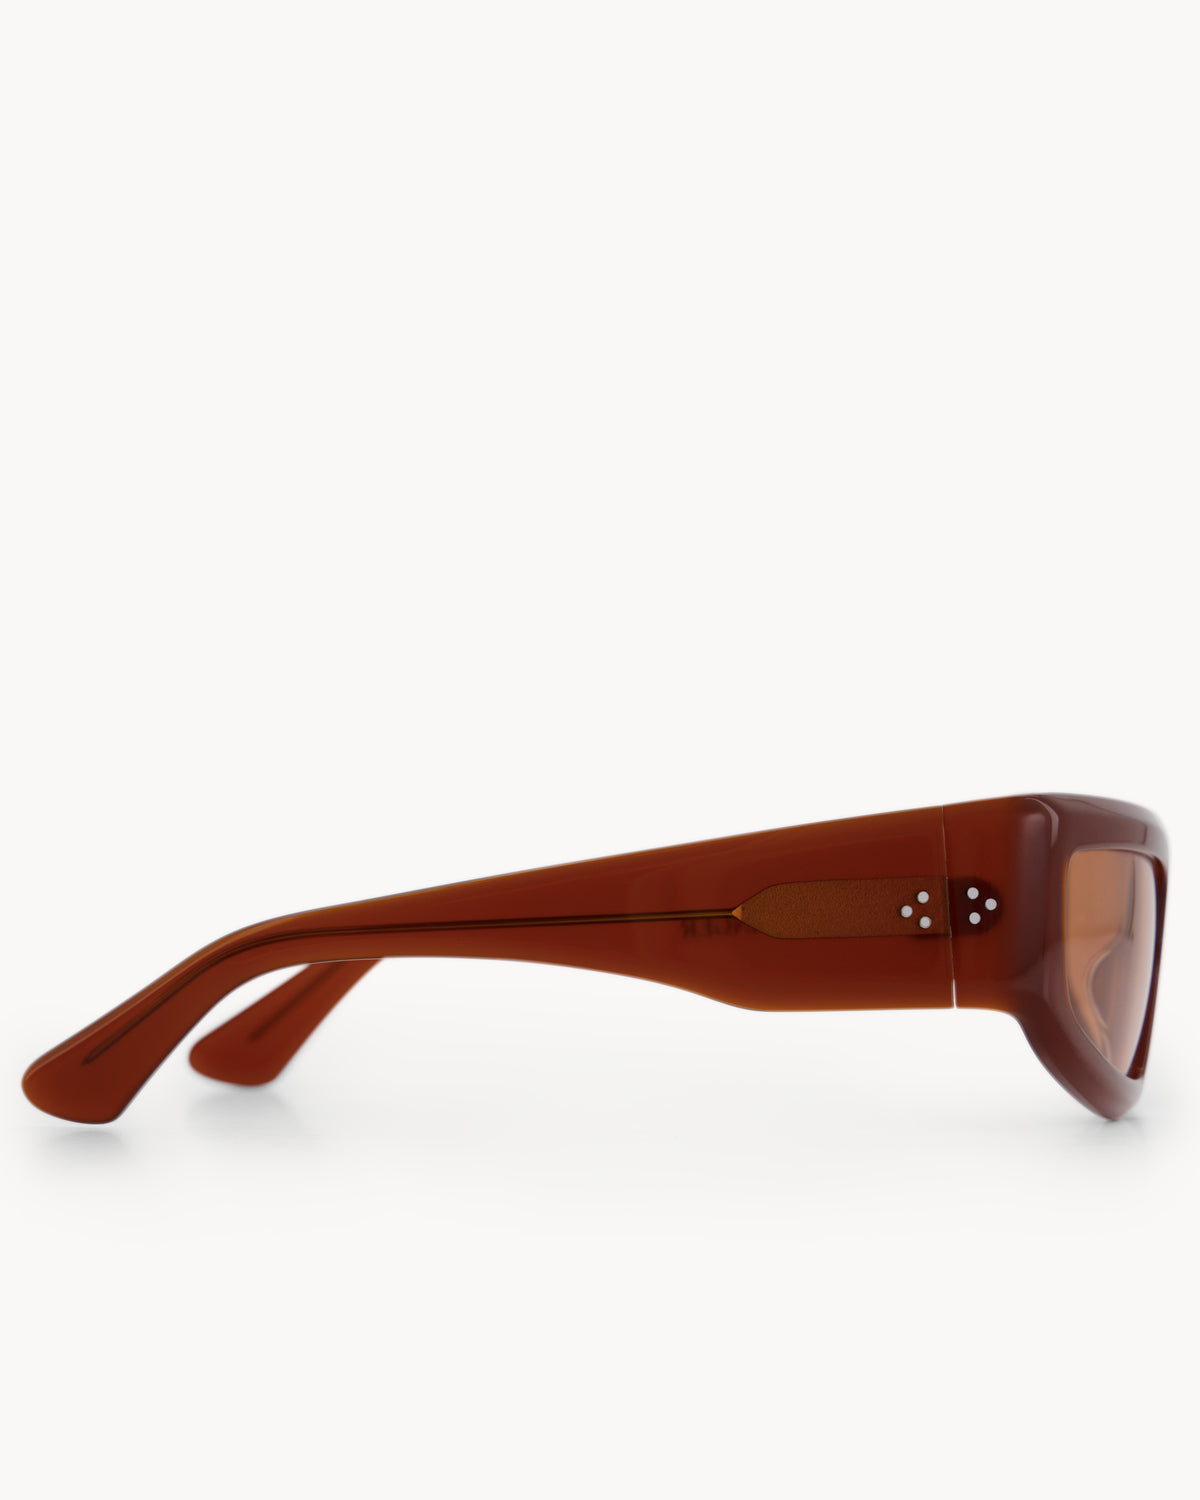 Port Tanger Andalucia Sunglasses in Terracotta Acetate and Amber Lenses 4